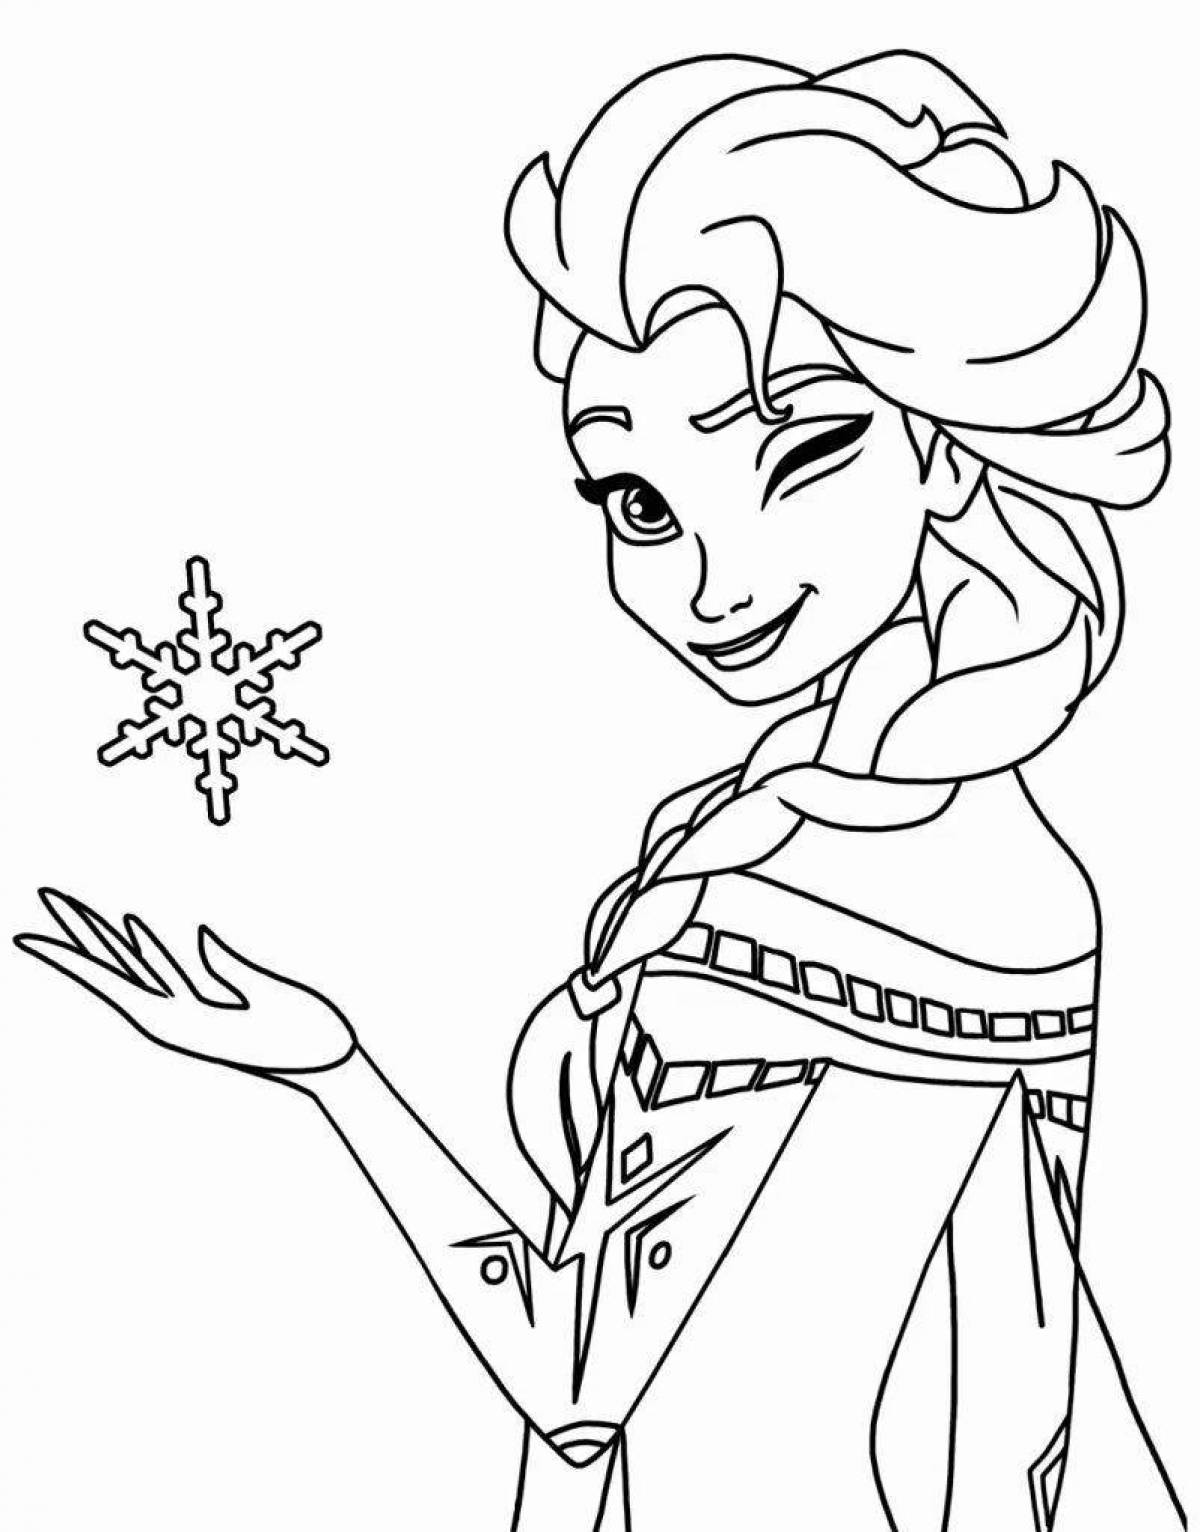 Elsa and anna beautiful coloring